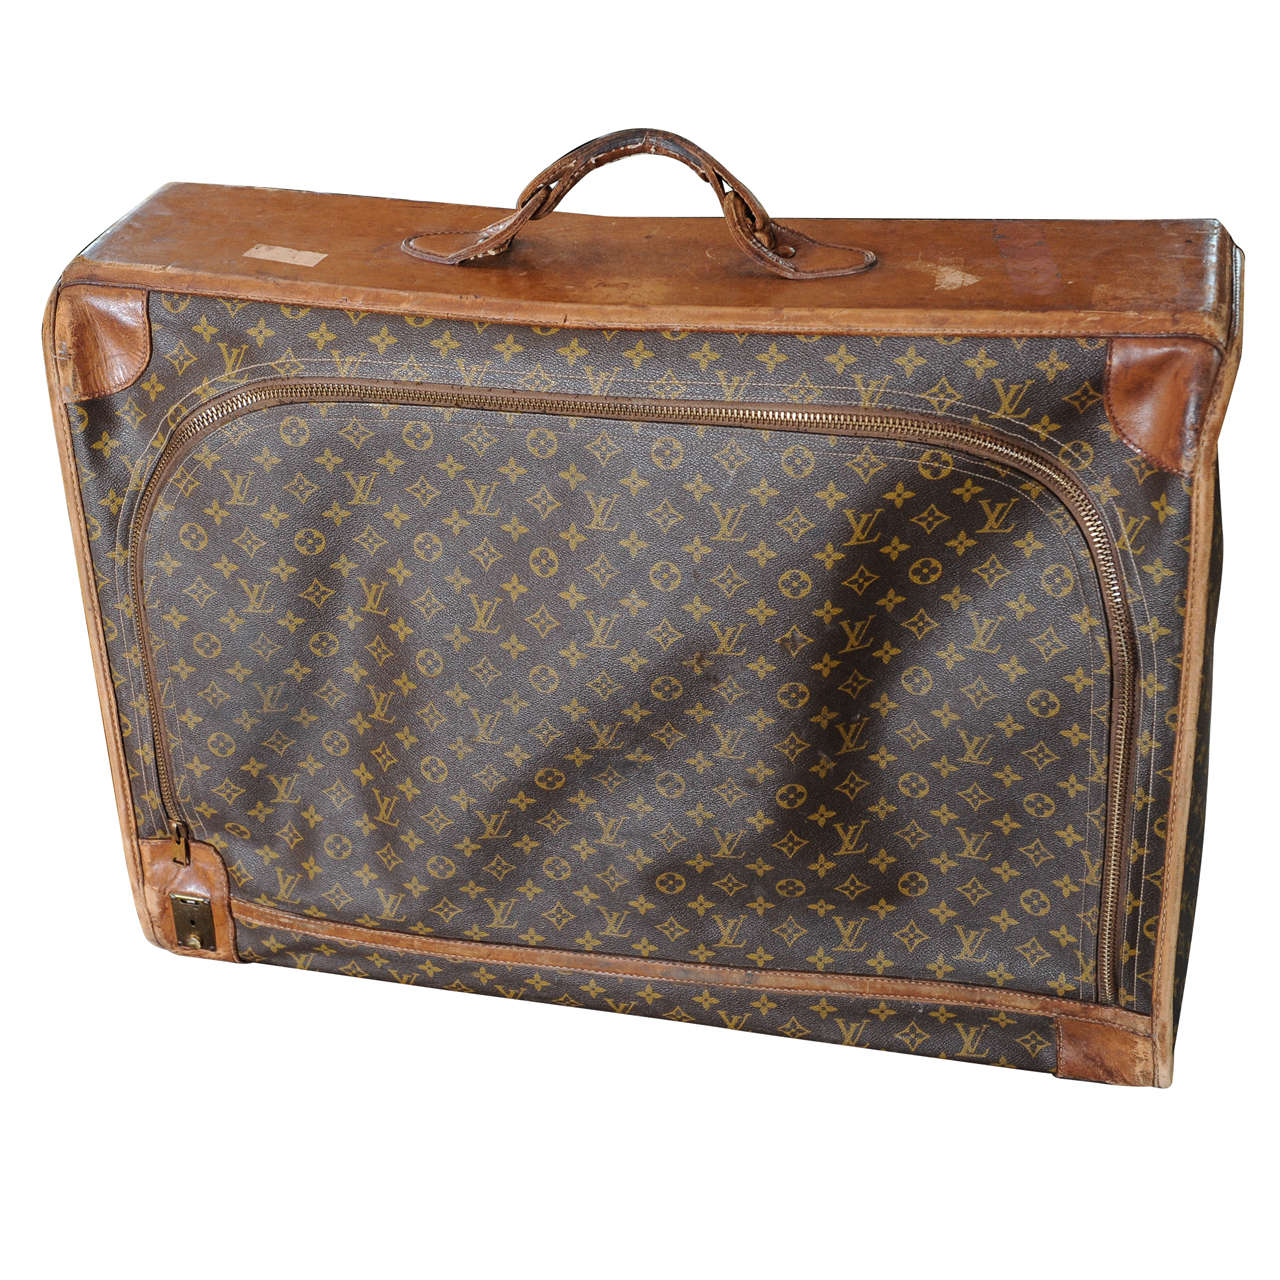 A vintage Louis Vuitton monogram leather suitcase / luggage